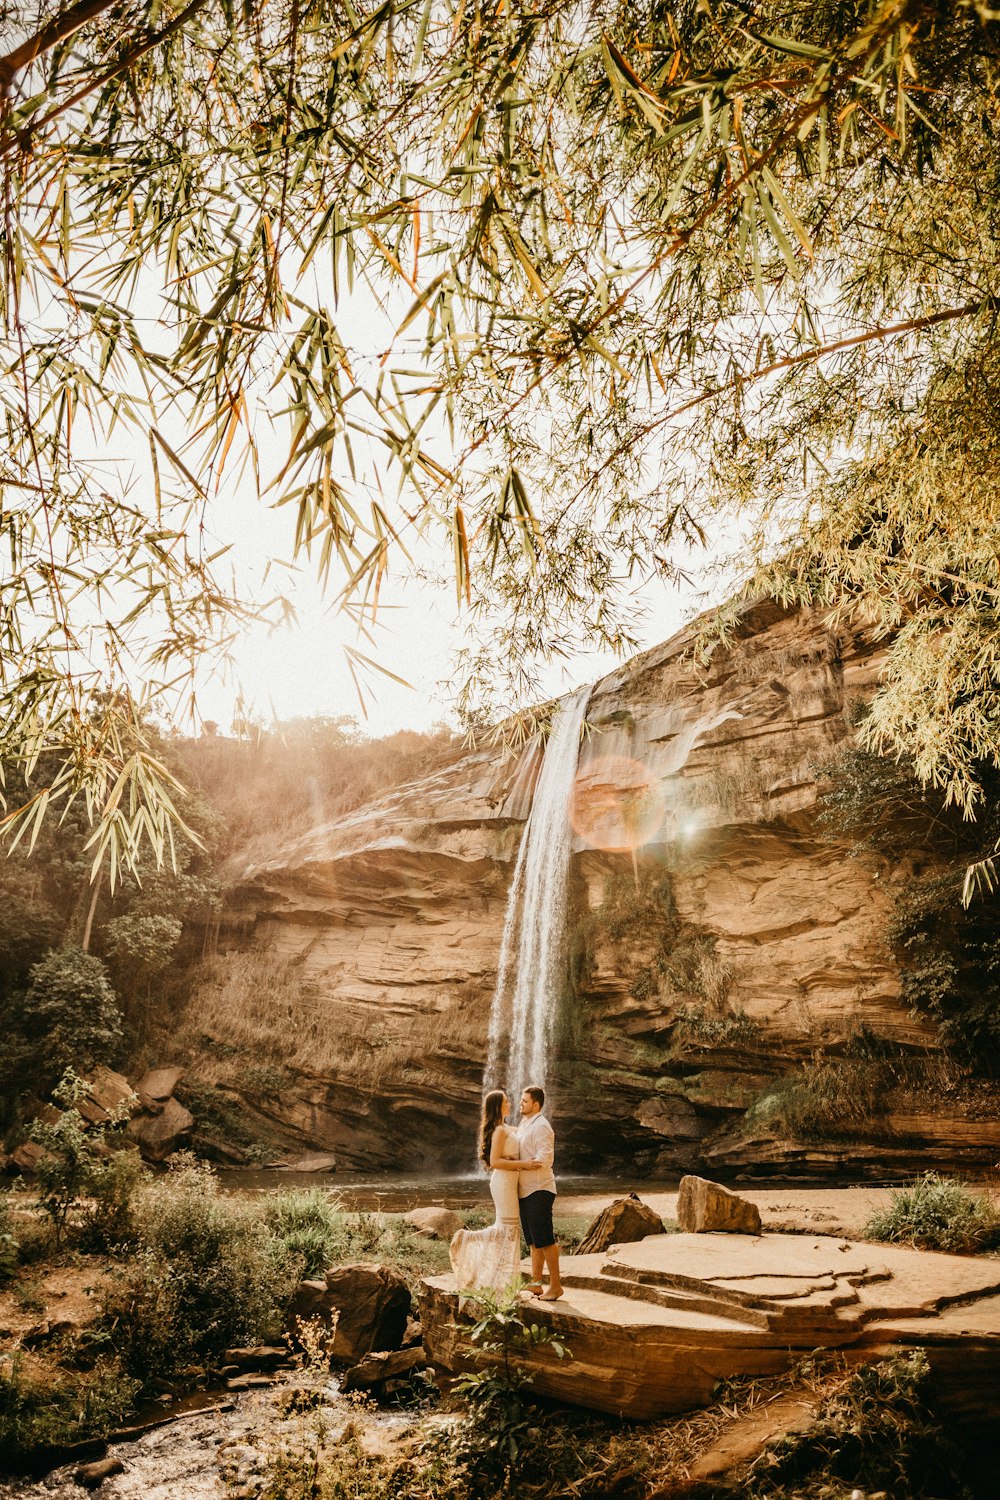 man and woman near water falls